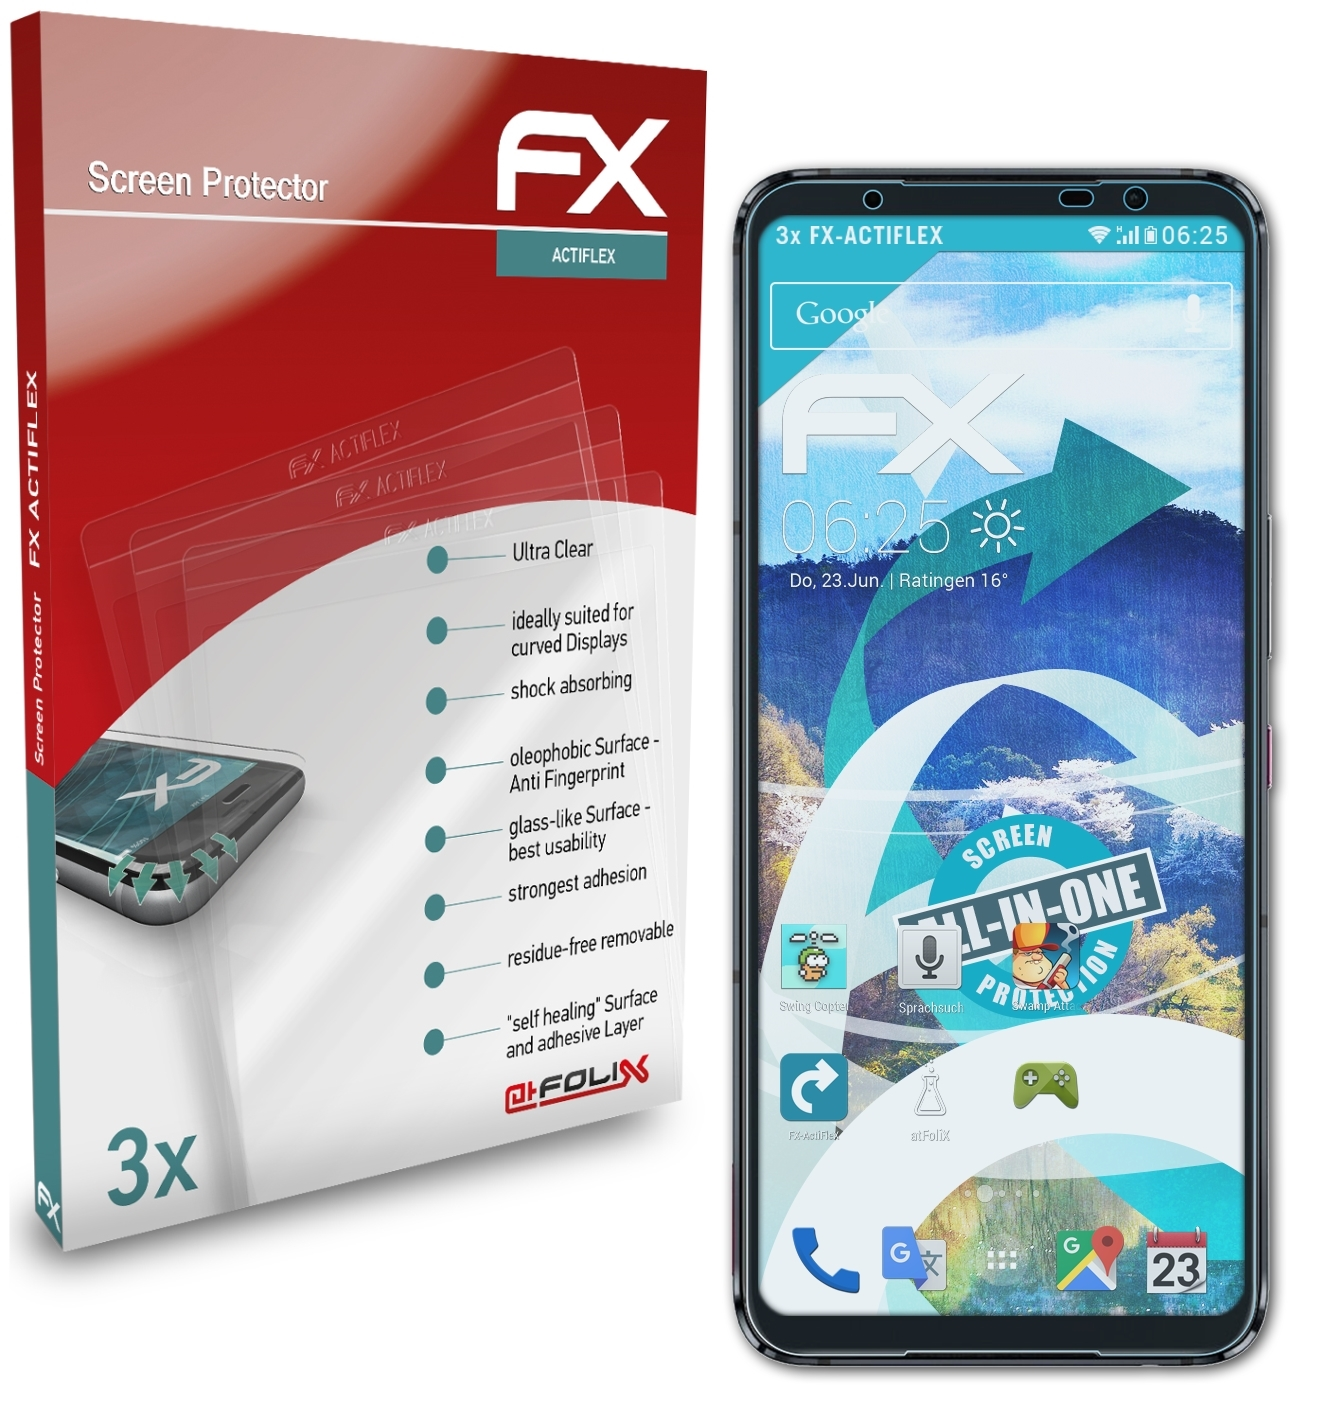 Phone ATFOLIX ROG 5 3x Displayschutz(für FX-ActiFleX Asus Pro)